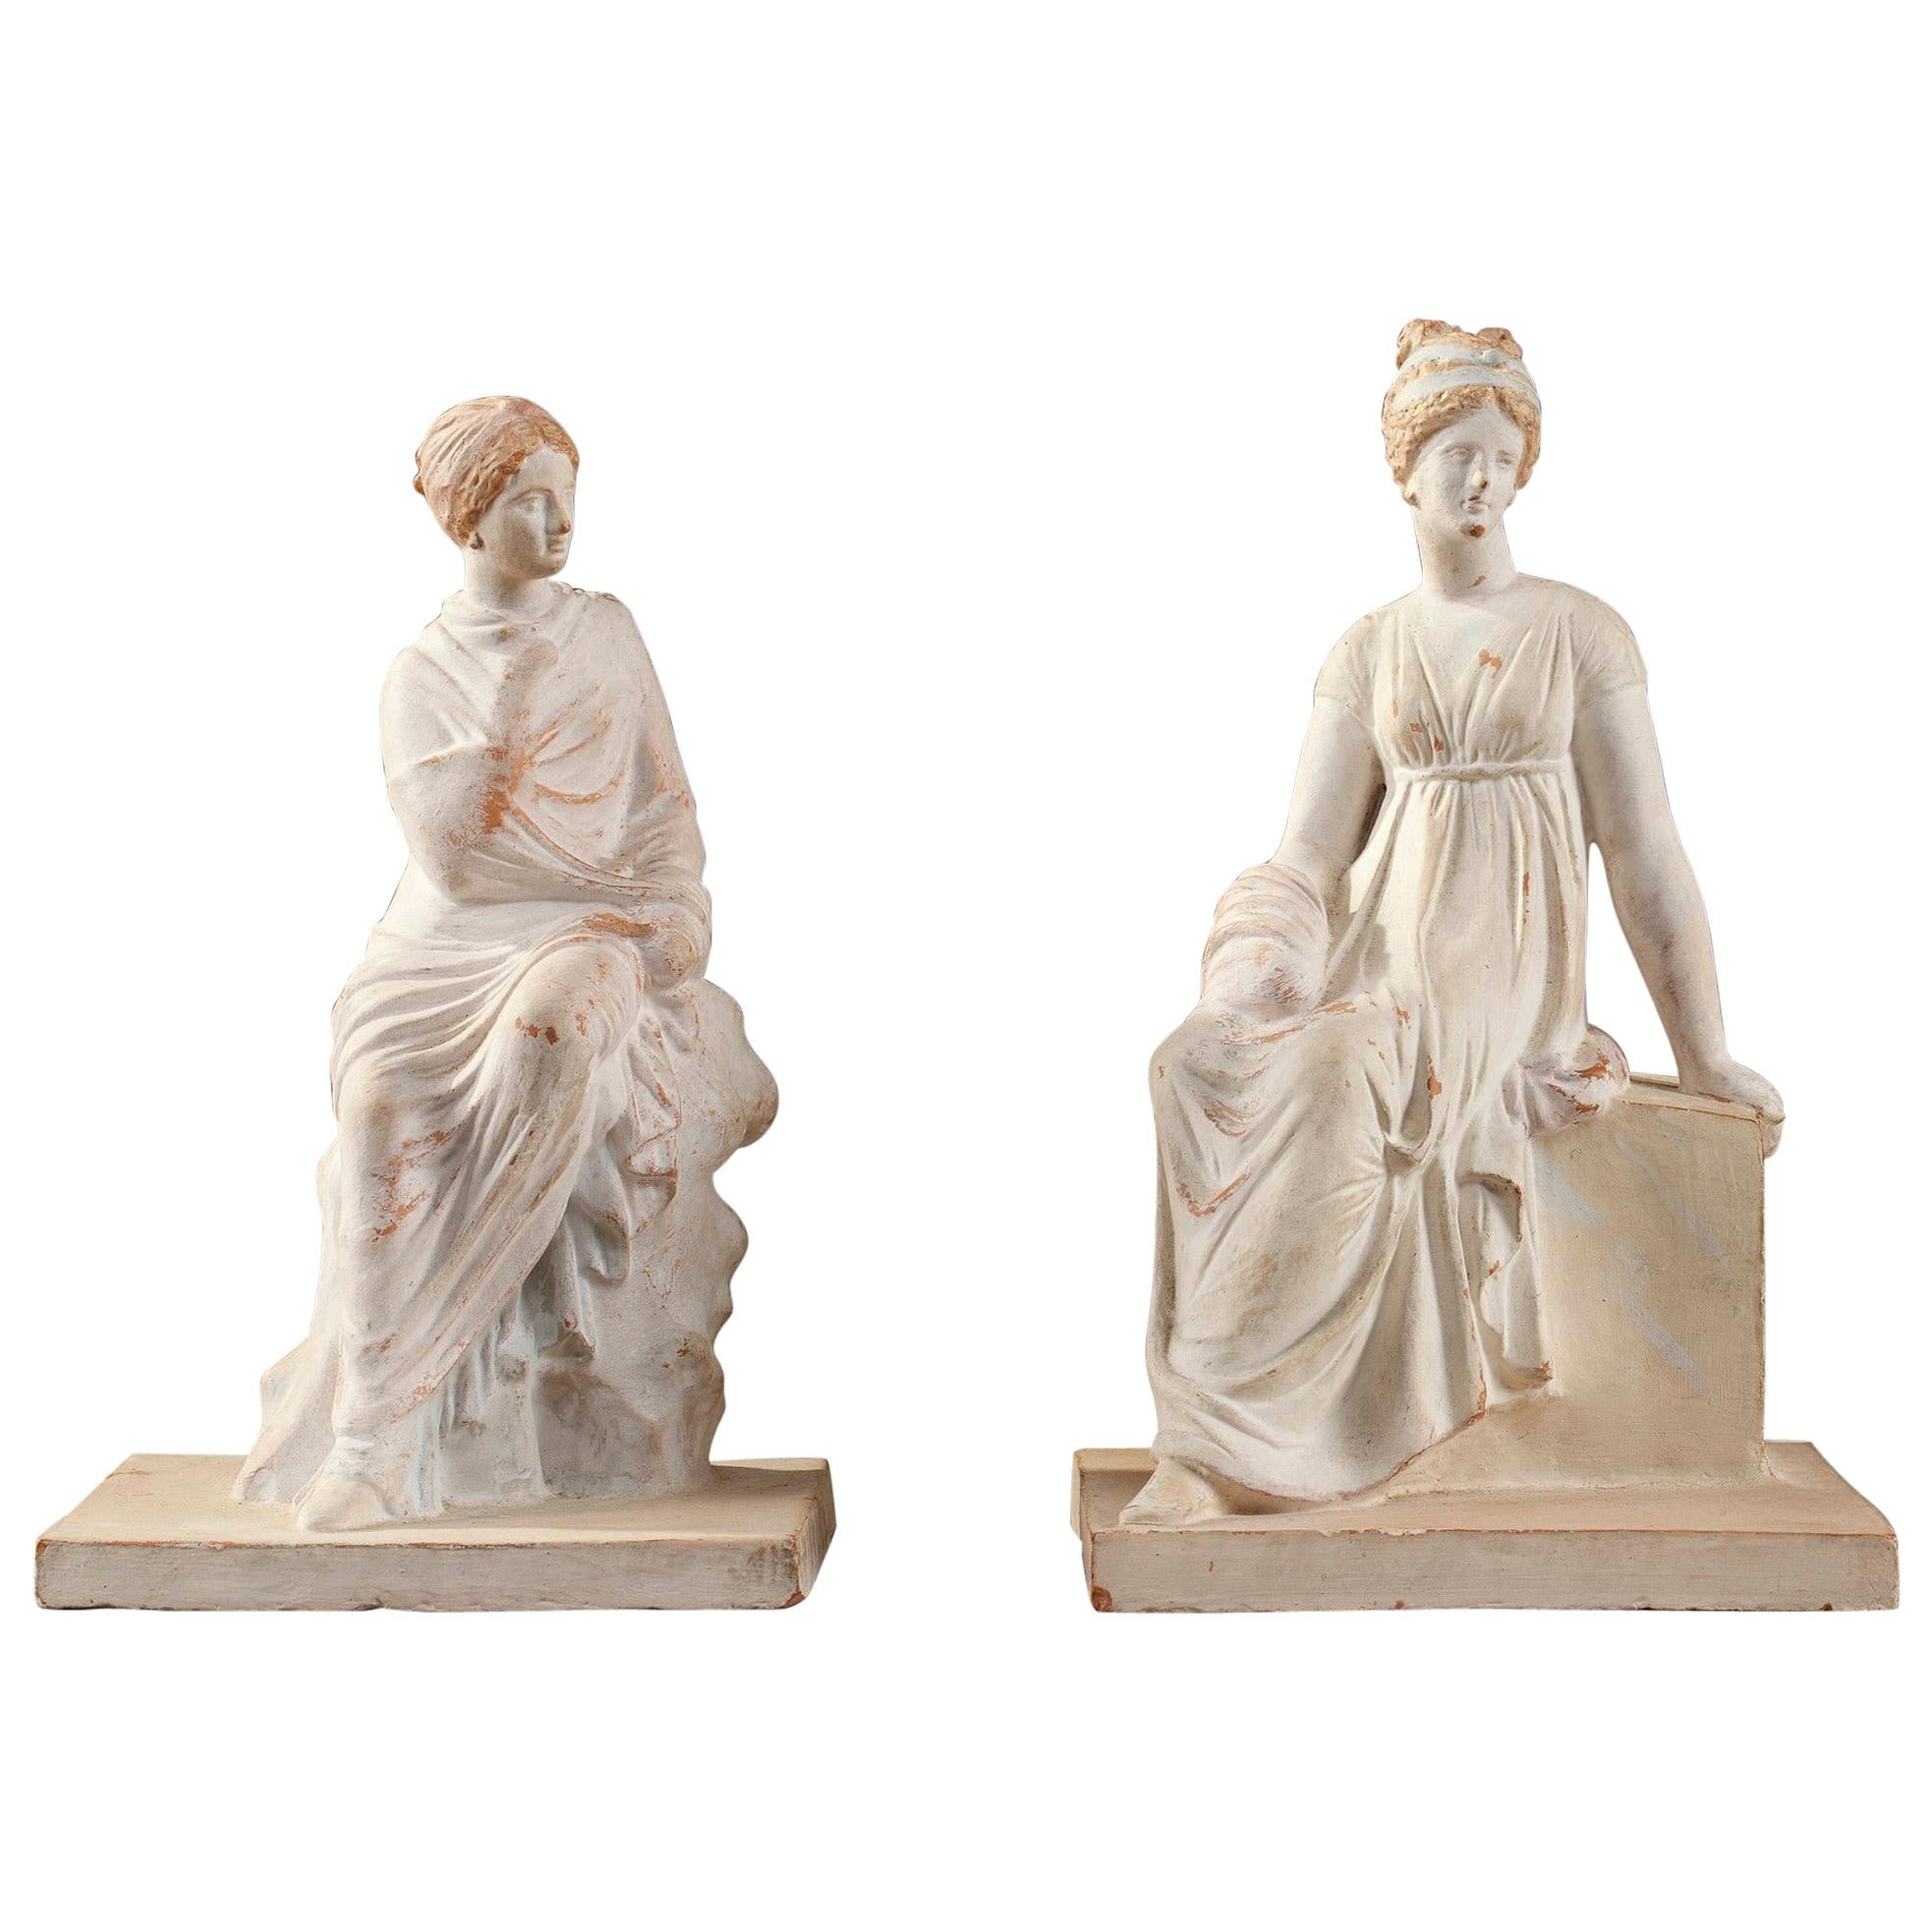 Set of 2 Terracotta Figurines in Tanagra Figurine Style